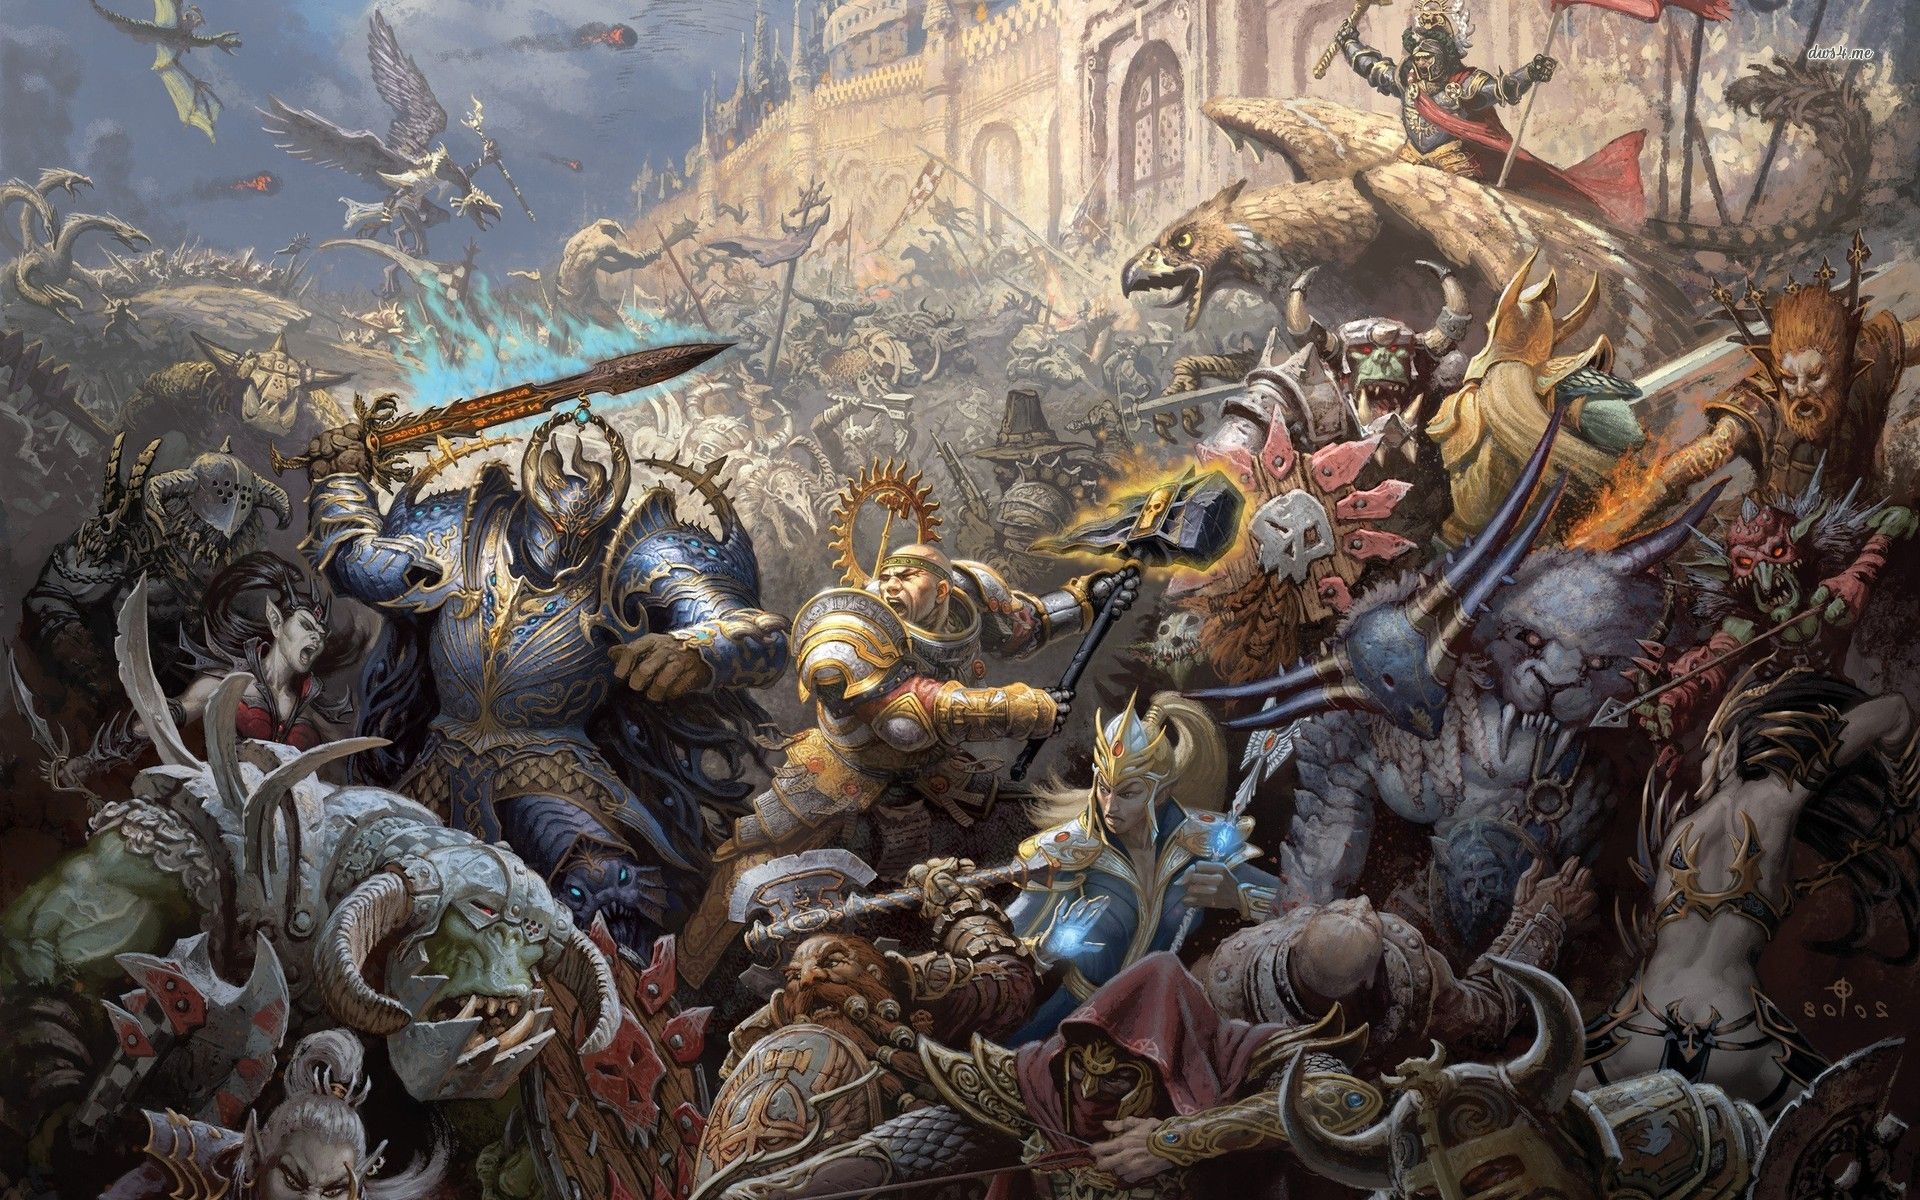 Warhammer Online: Age Of Reckoning #1